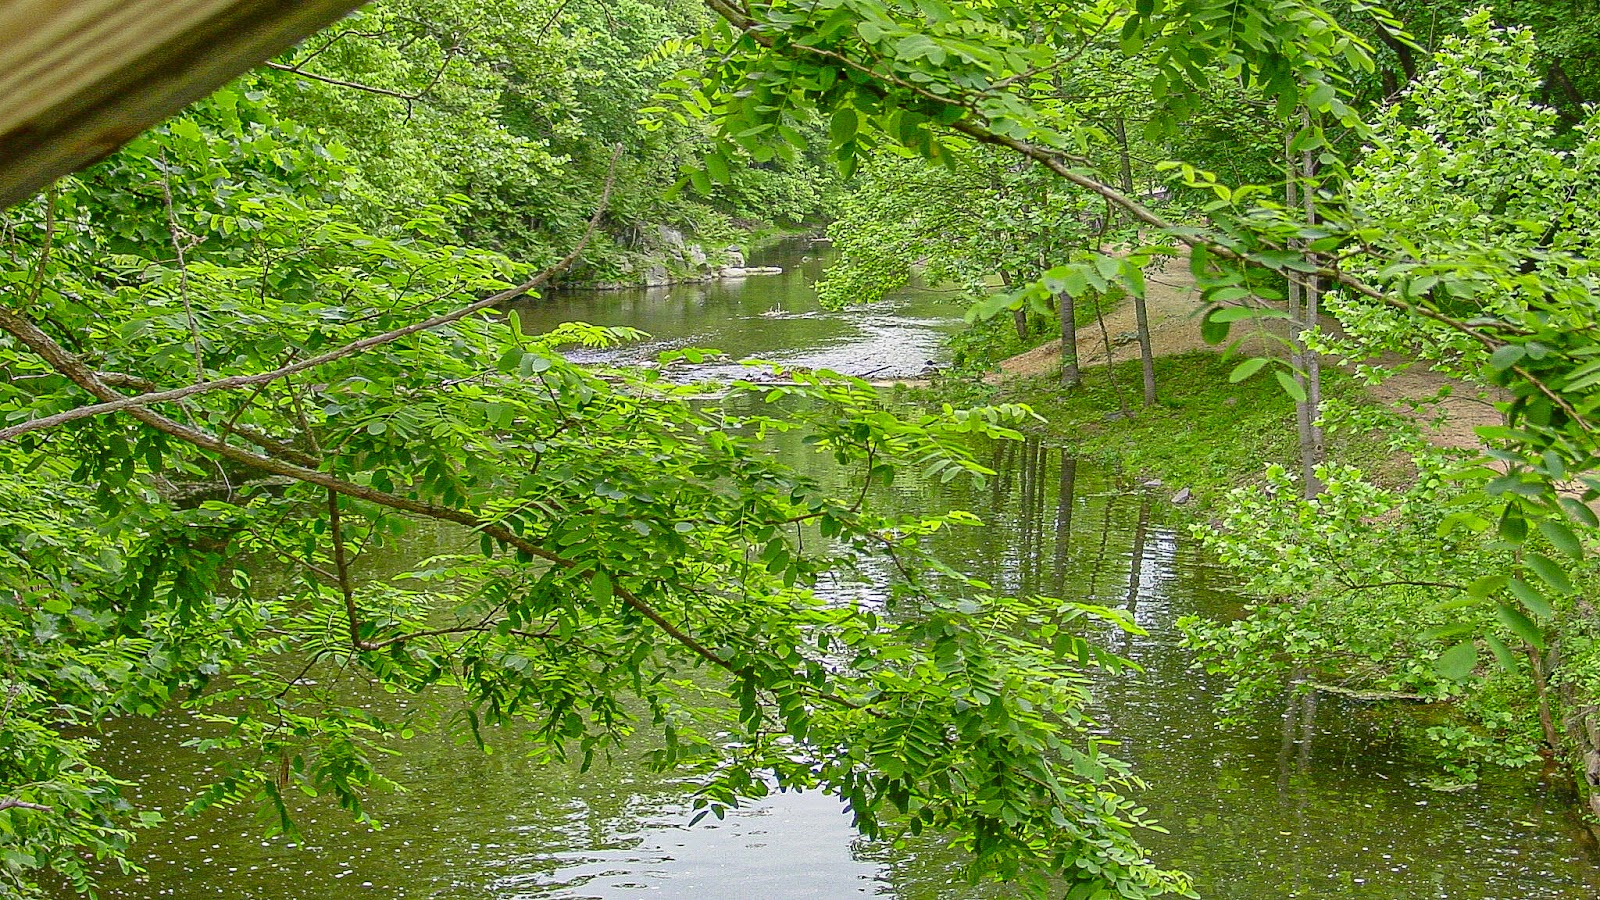 Green tree limbs hang over still water from a wooden bridge.